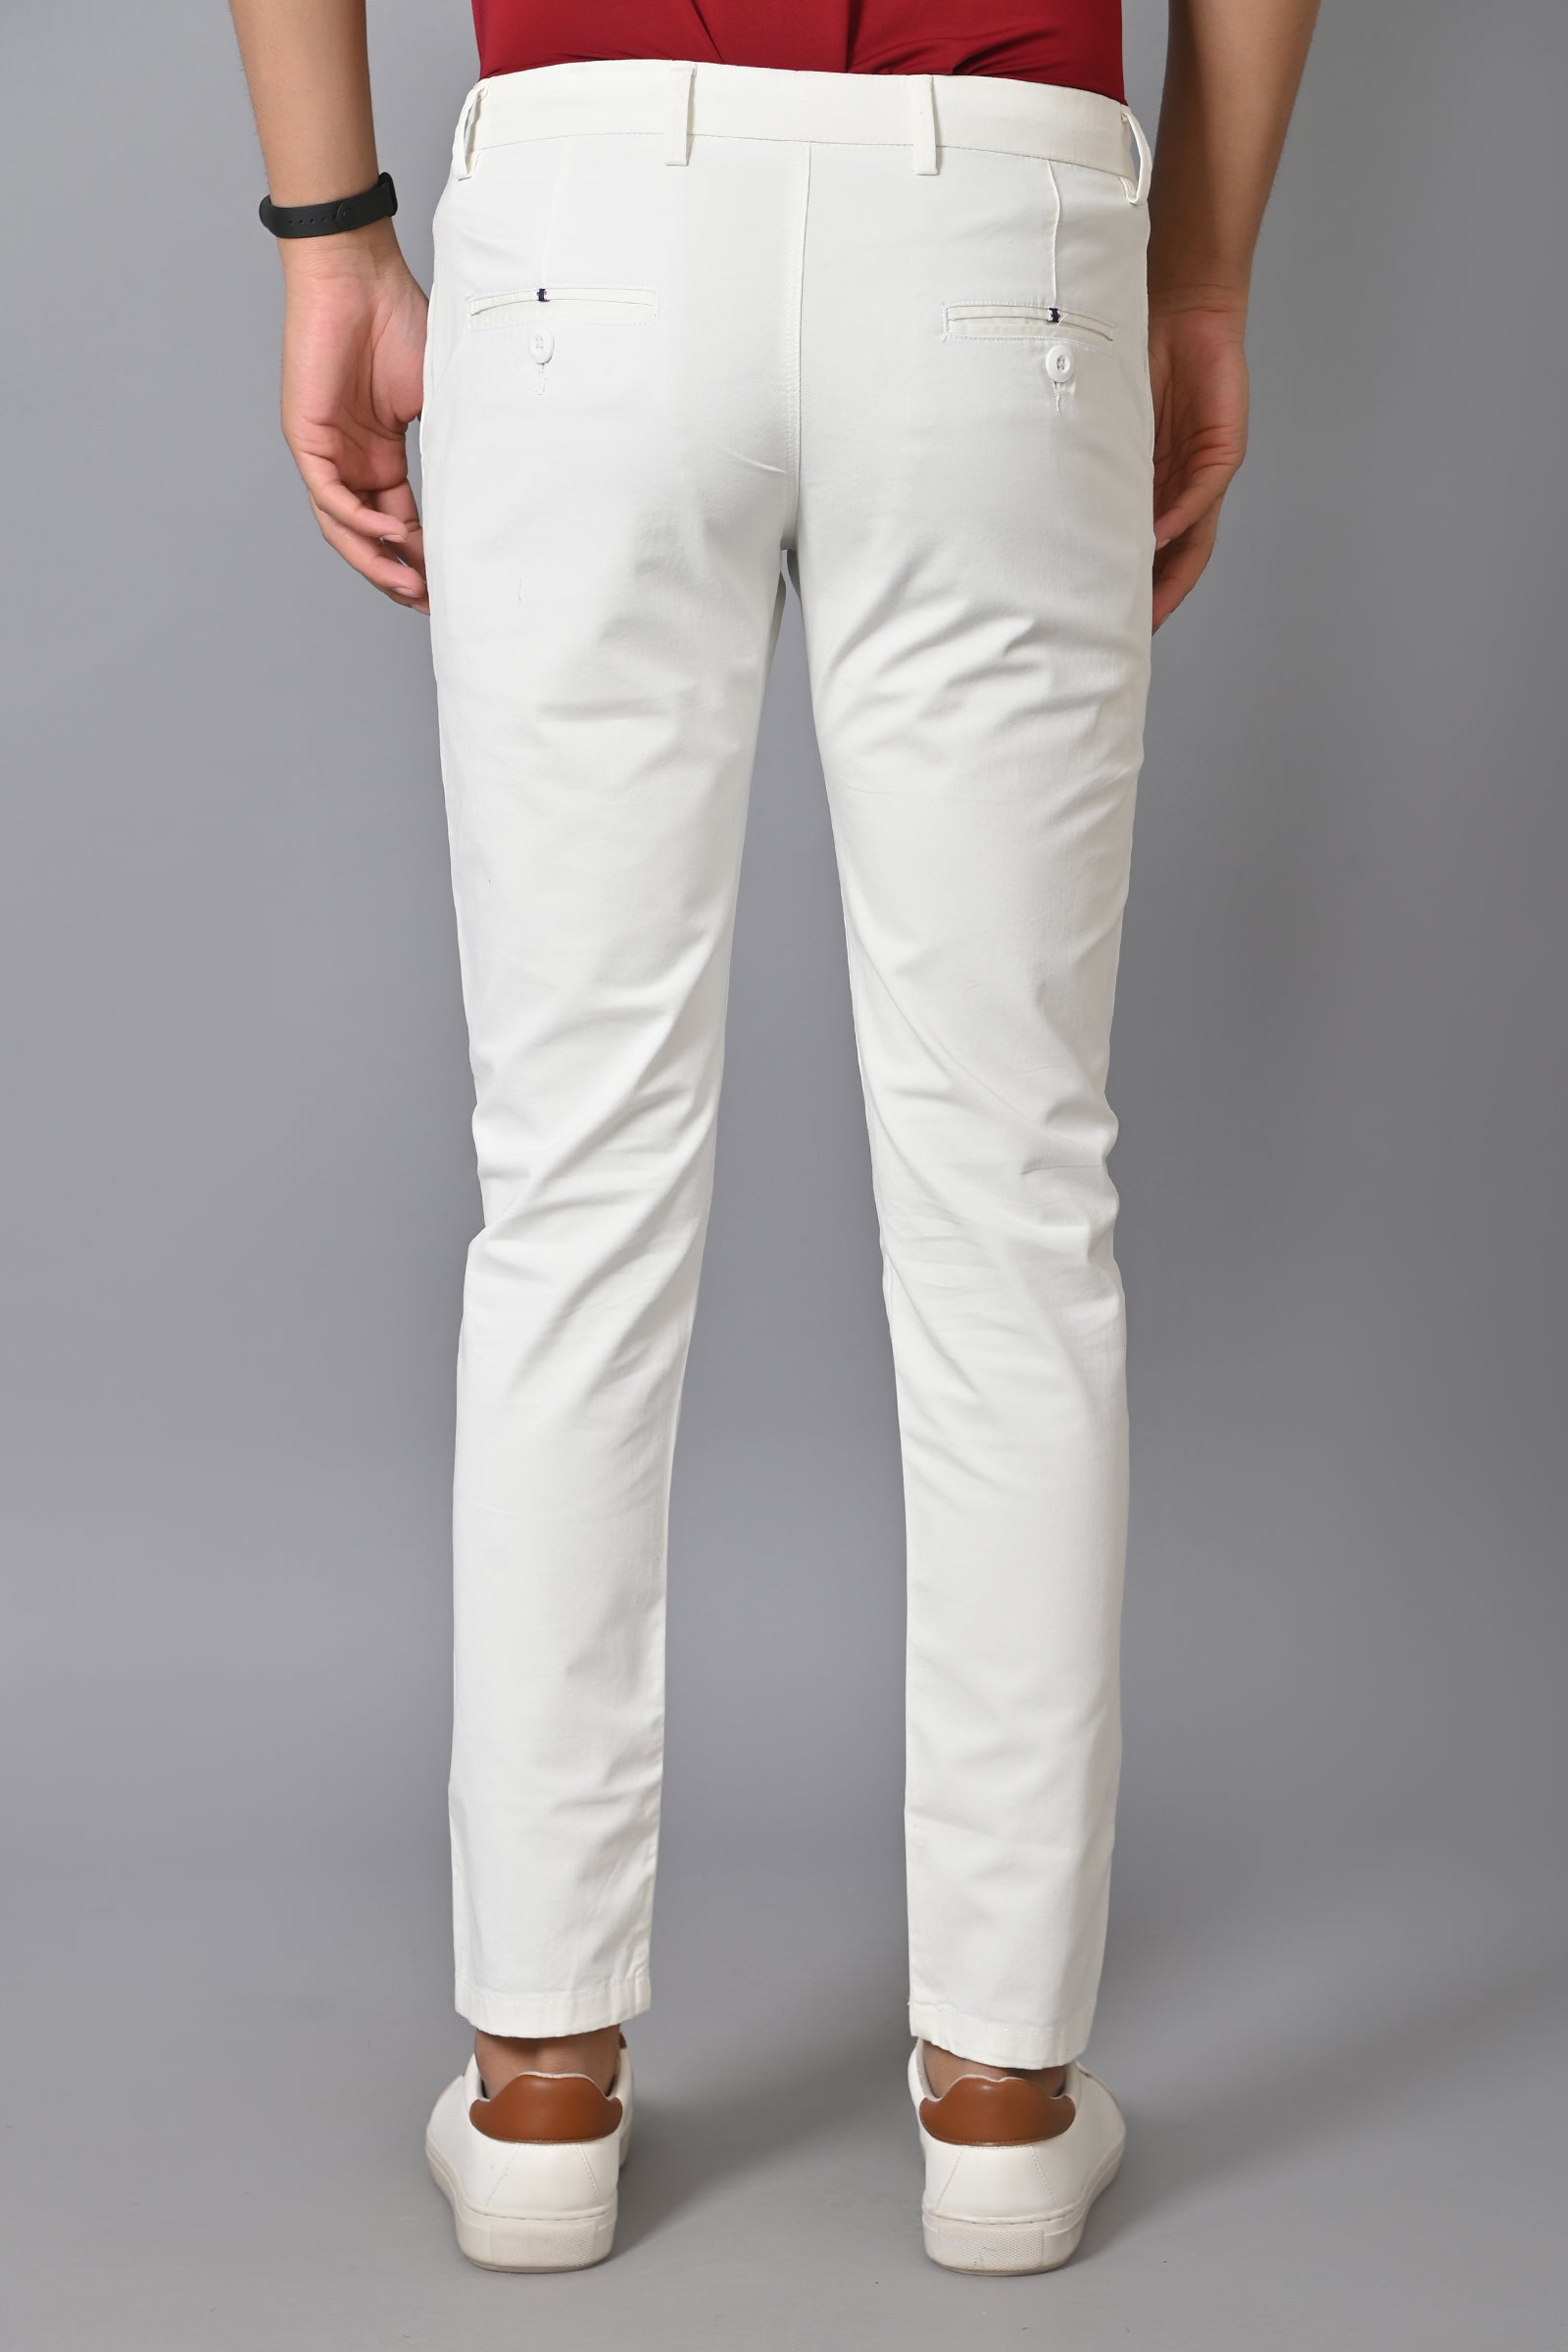 Jaguro Men's Bottomwear Trouser Chinos WHITE